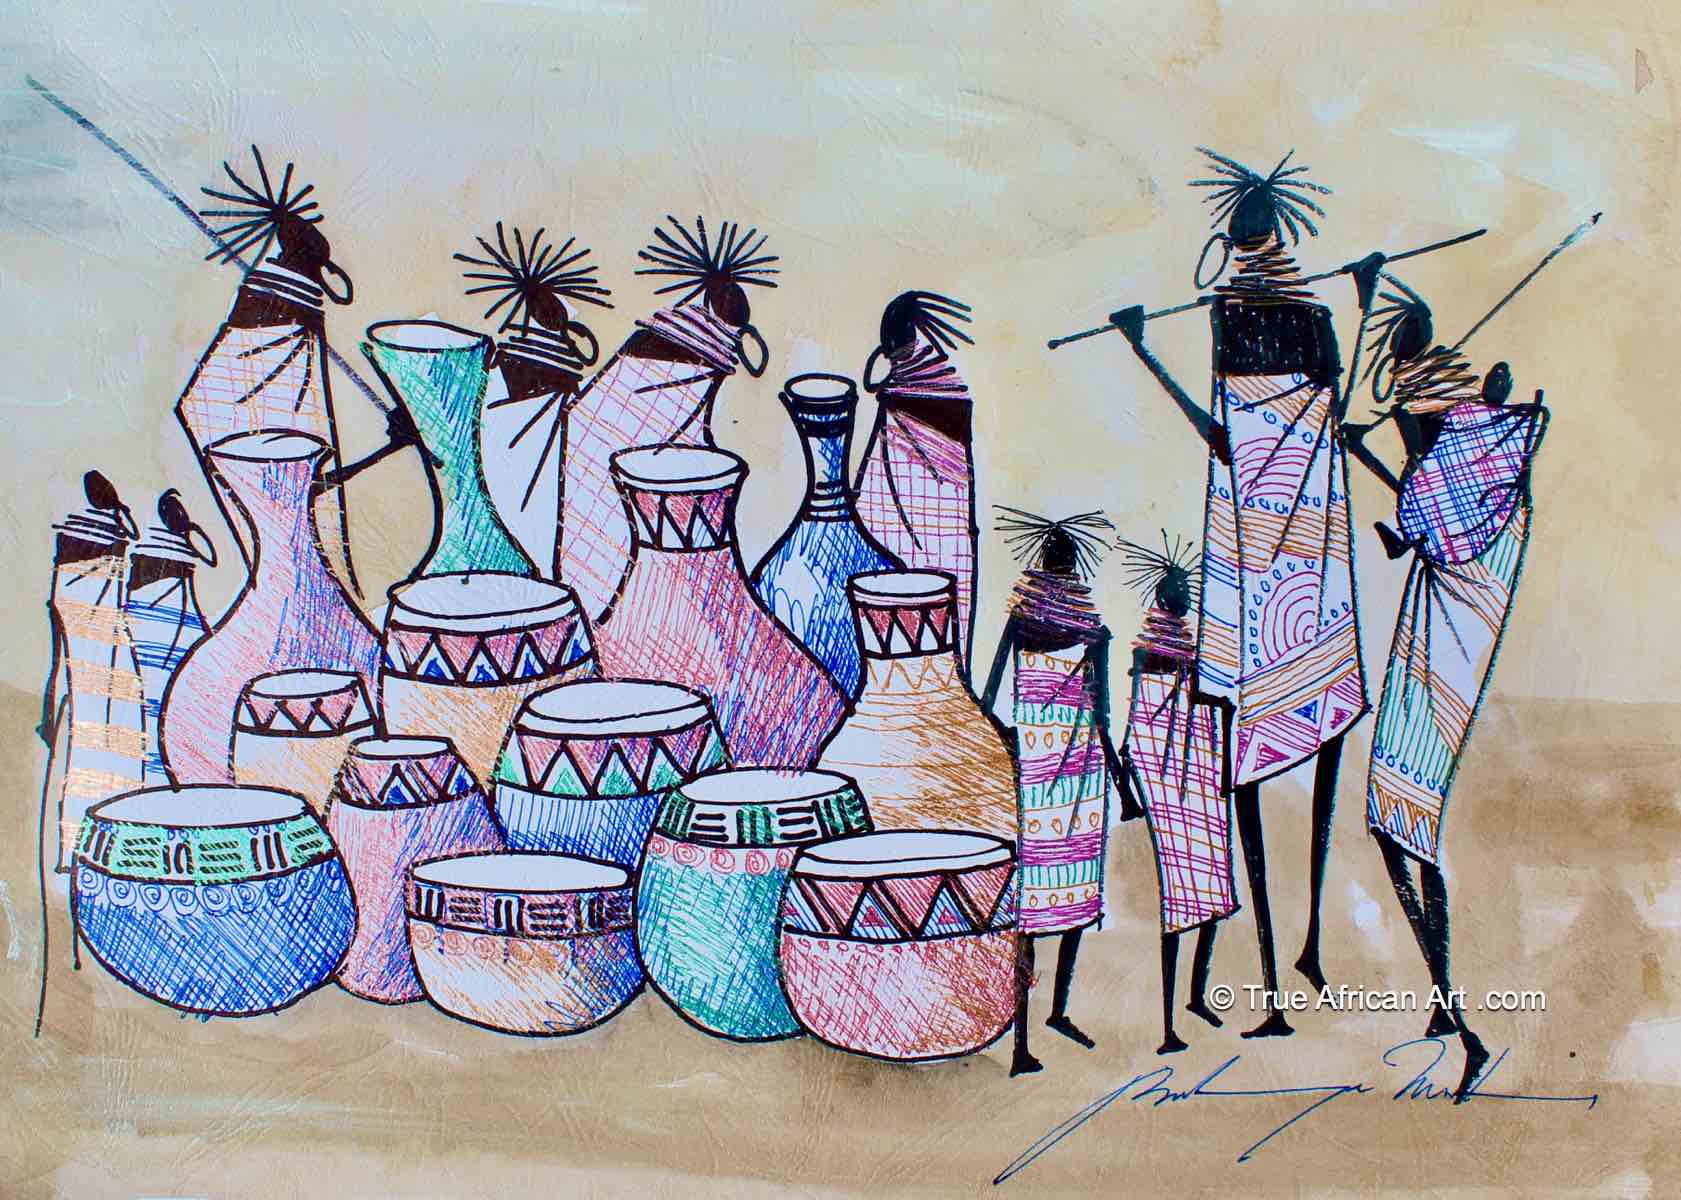 Martin Bulinya  |  Kenya  |  B-595  |  Original  |  True African Art .com